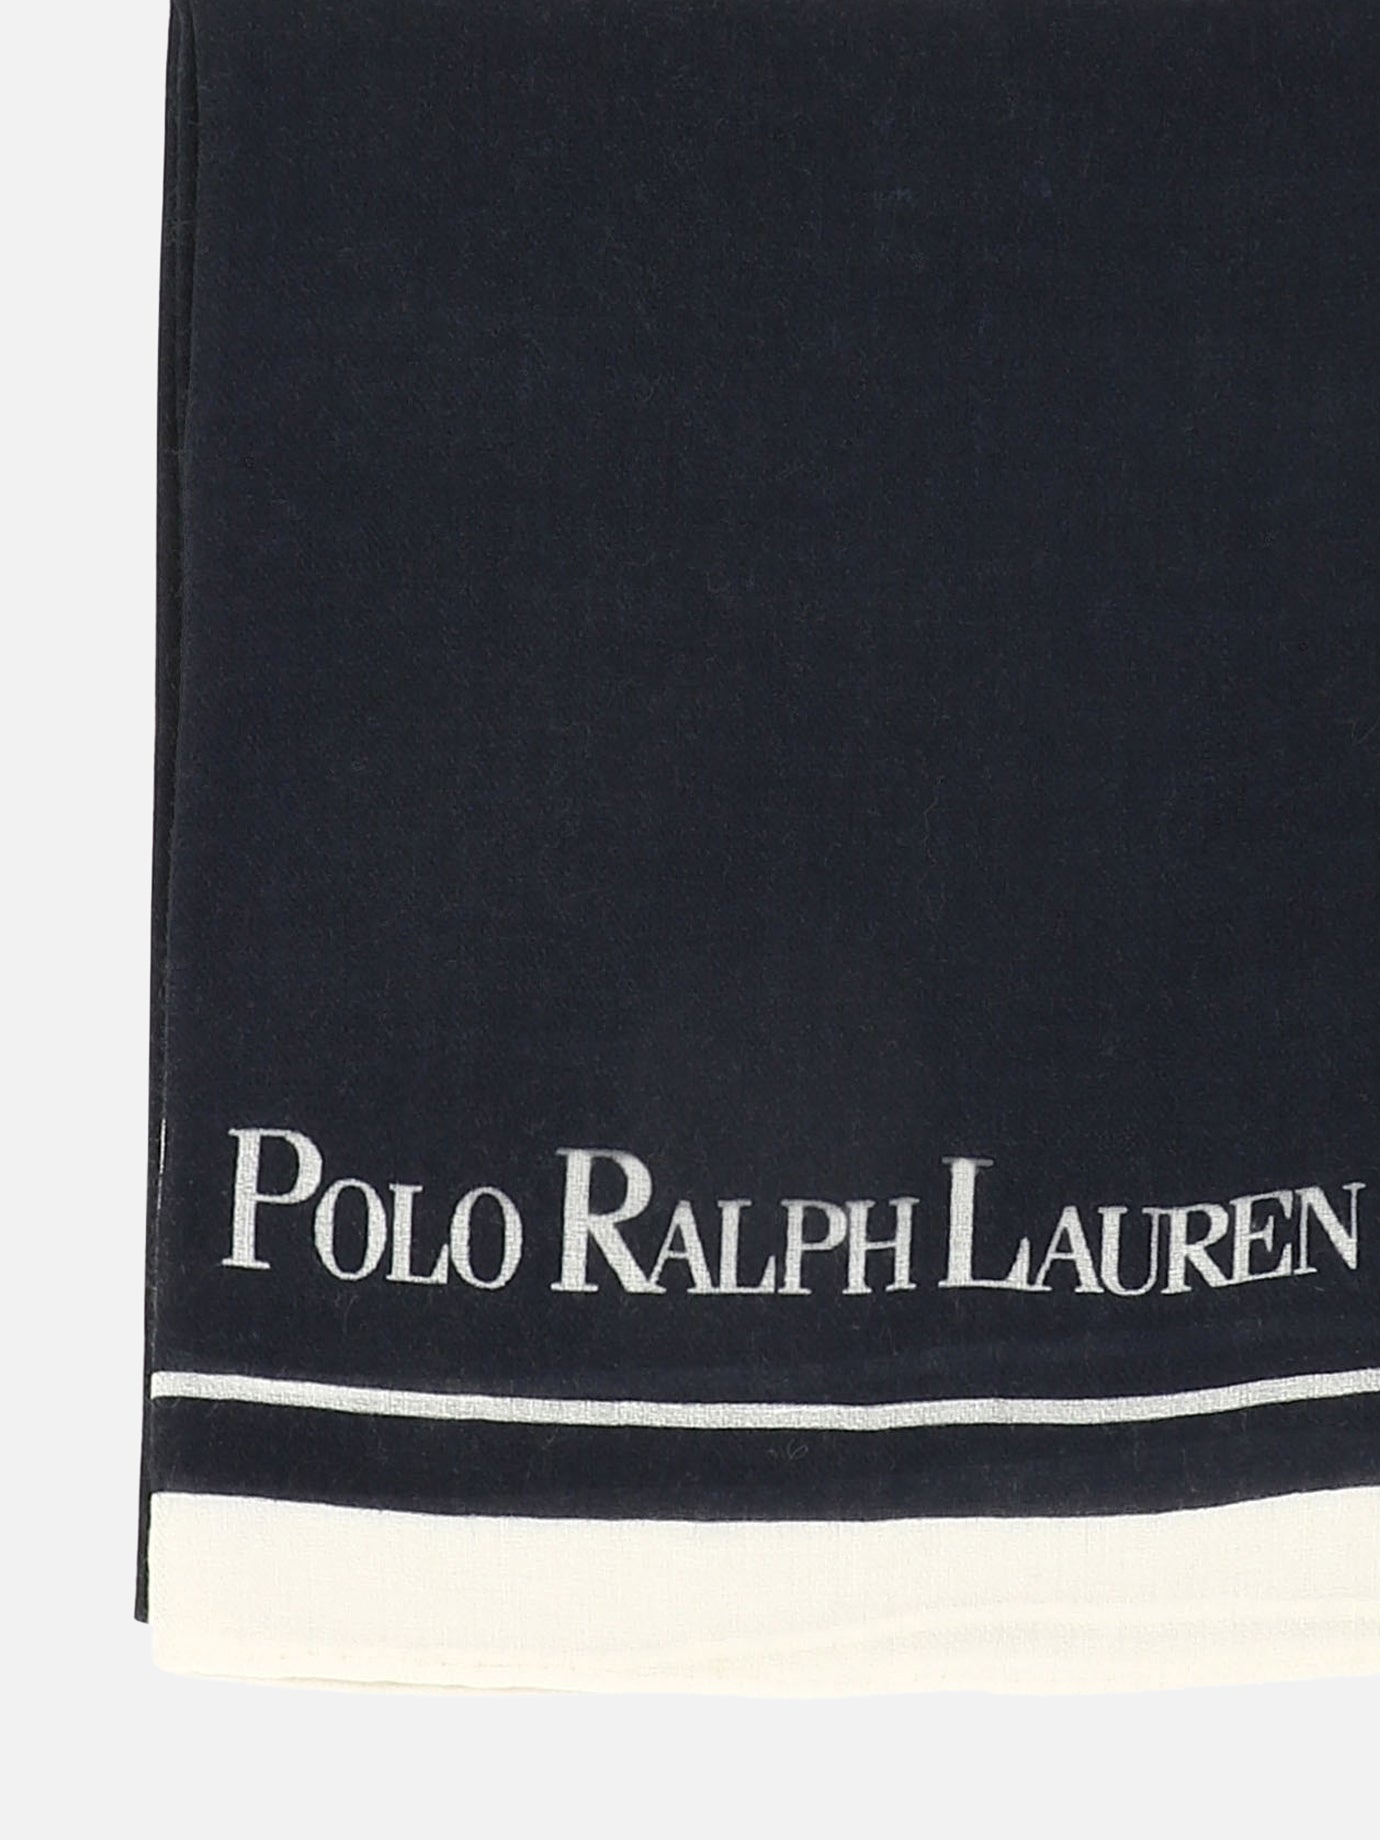 "Polo Ralph Lauren" scarf